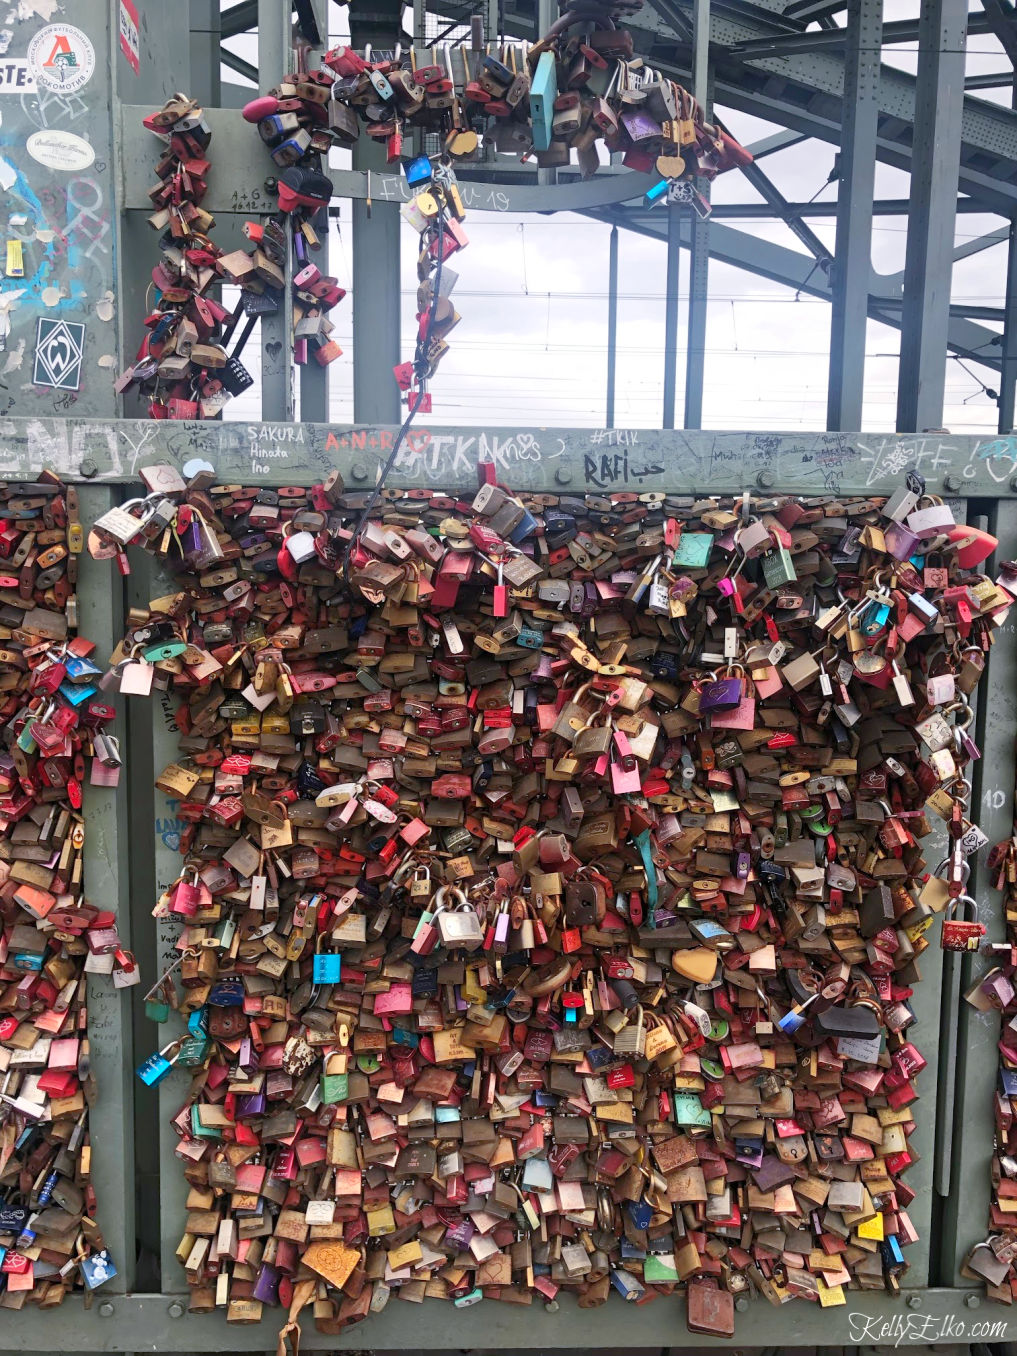 Love Locks bridge in Cologne Germany kellyelko.com #lovelocksbridge #colognegermany #travel #rivercruise #rhineriver